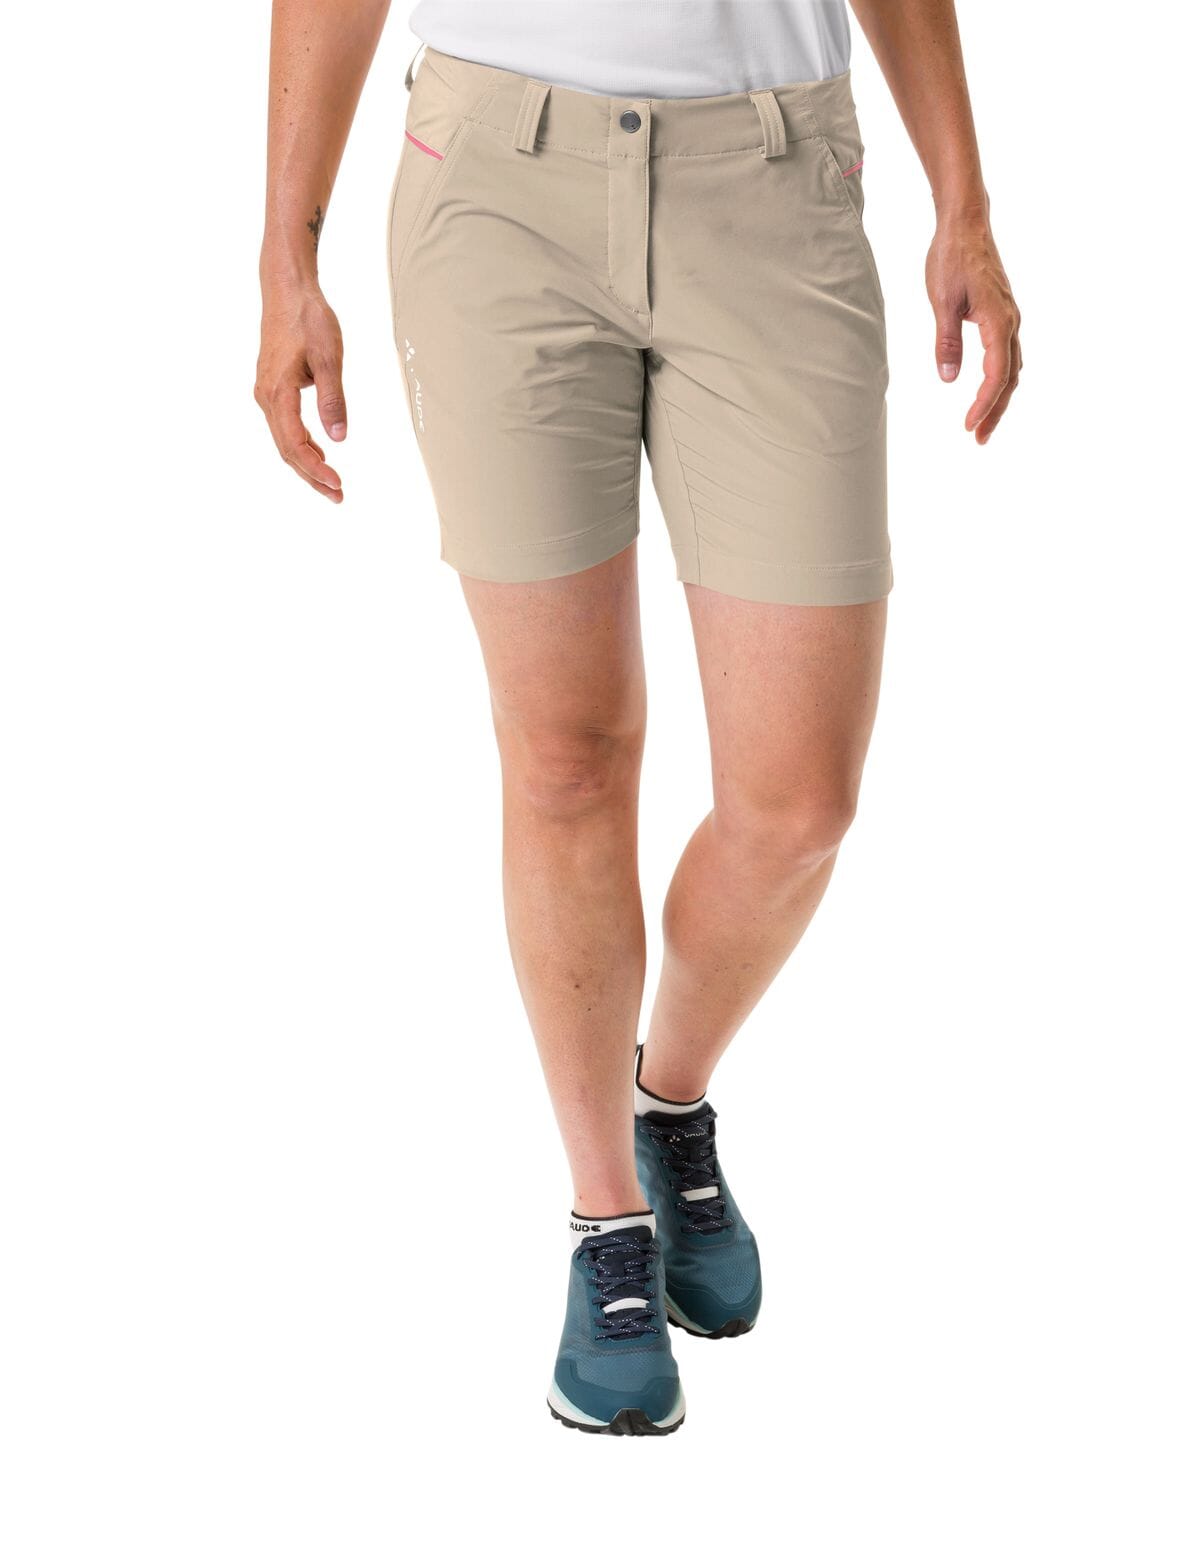 Vaude - W's Skomer Shorts III - Recycled polyester - Weekendbee - sustainable sportswear